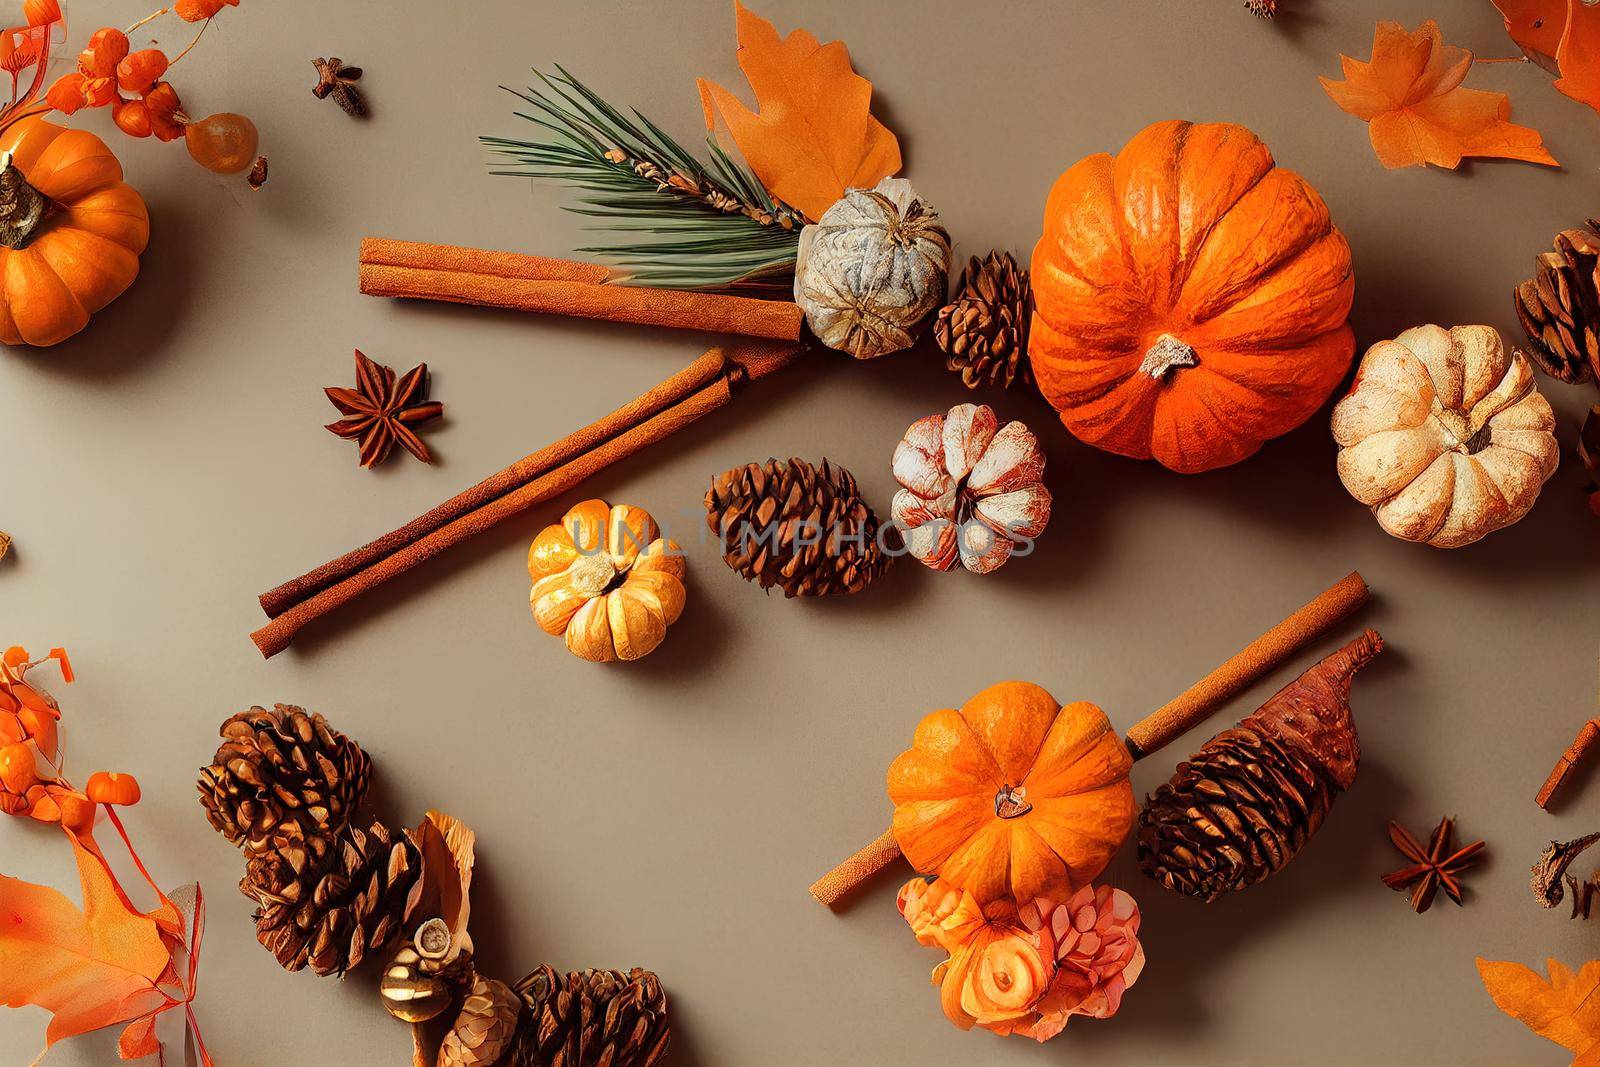 Autumn composition with orange pumpkin ,pine cones, cinnamon sticks, by 2ragon